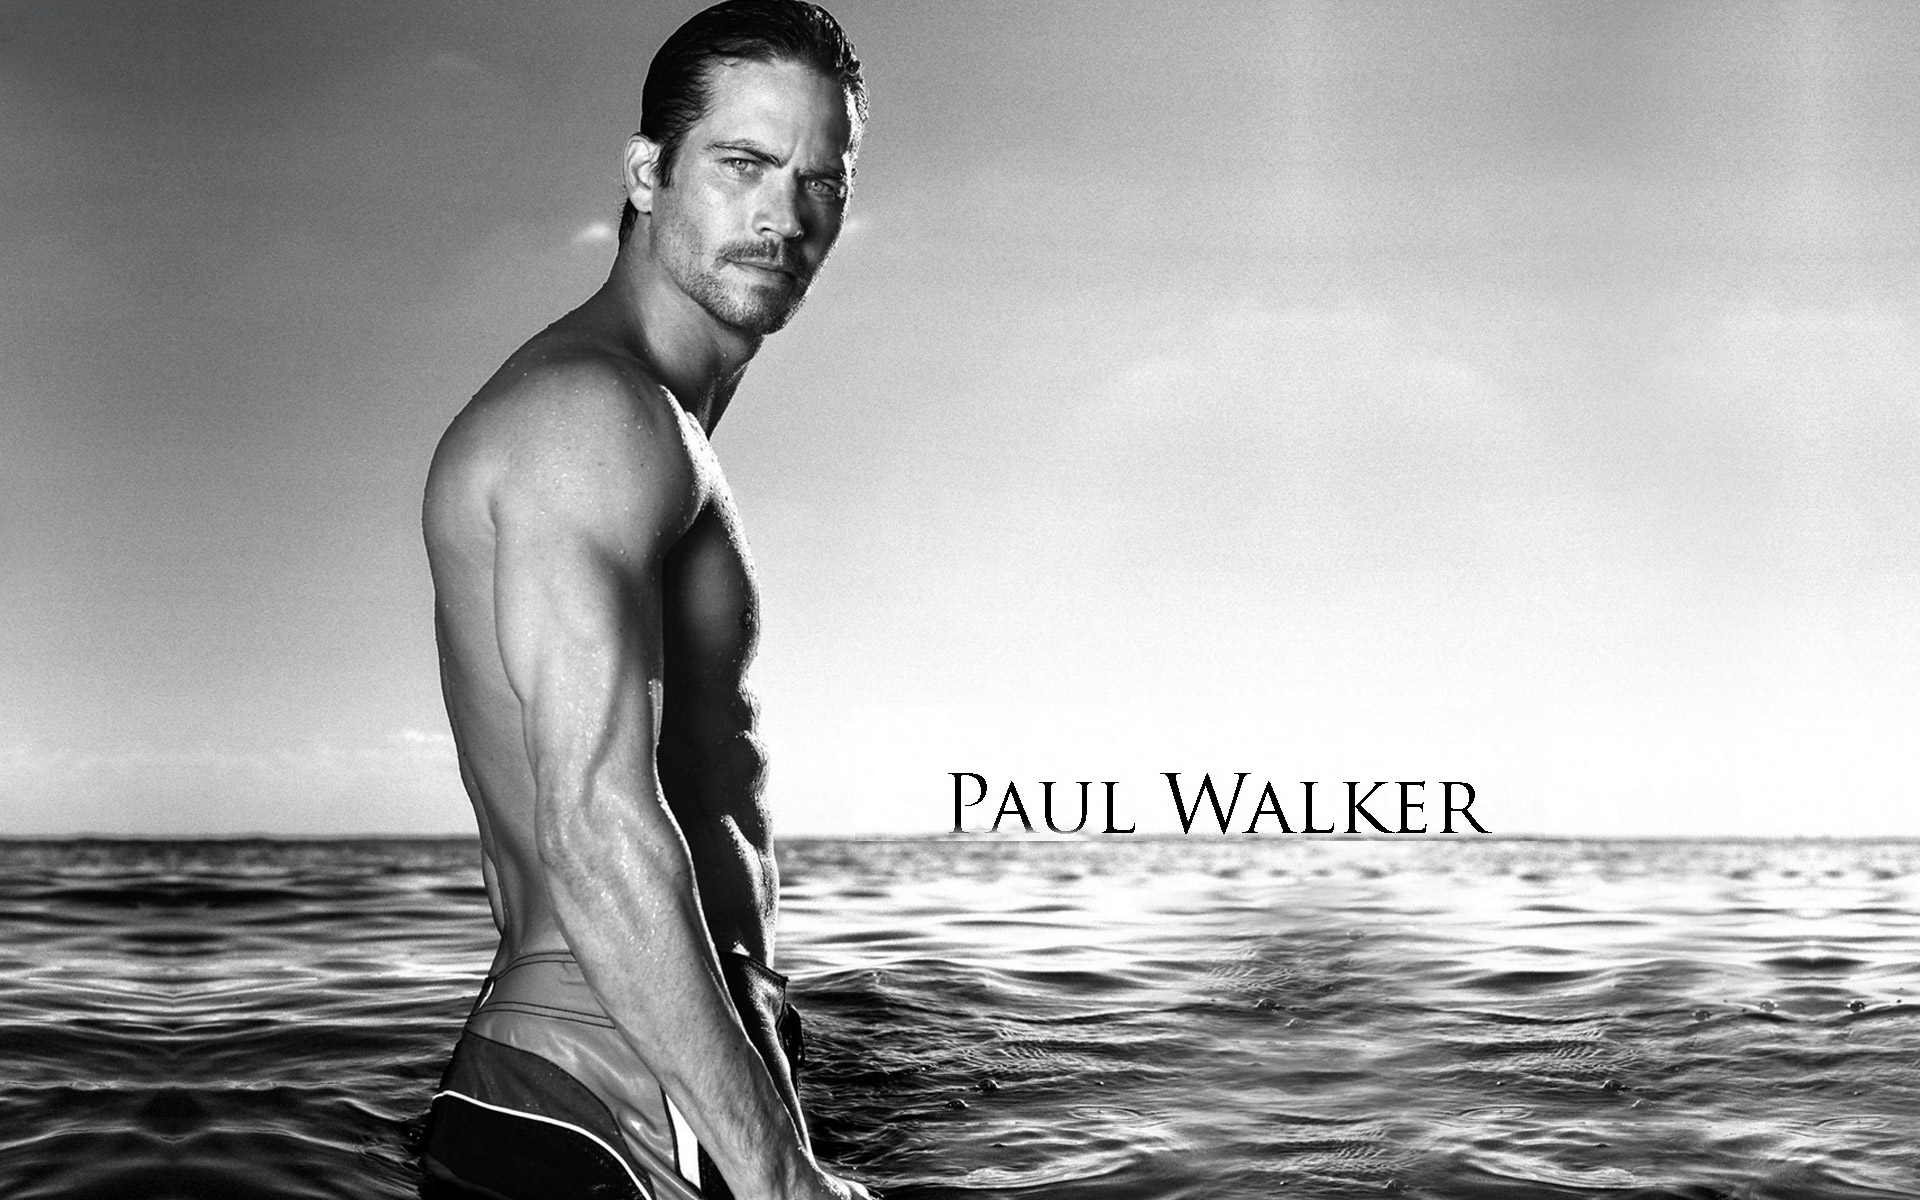 Of The Best High Quality Paul Walker Wallpaper HD Is